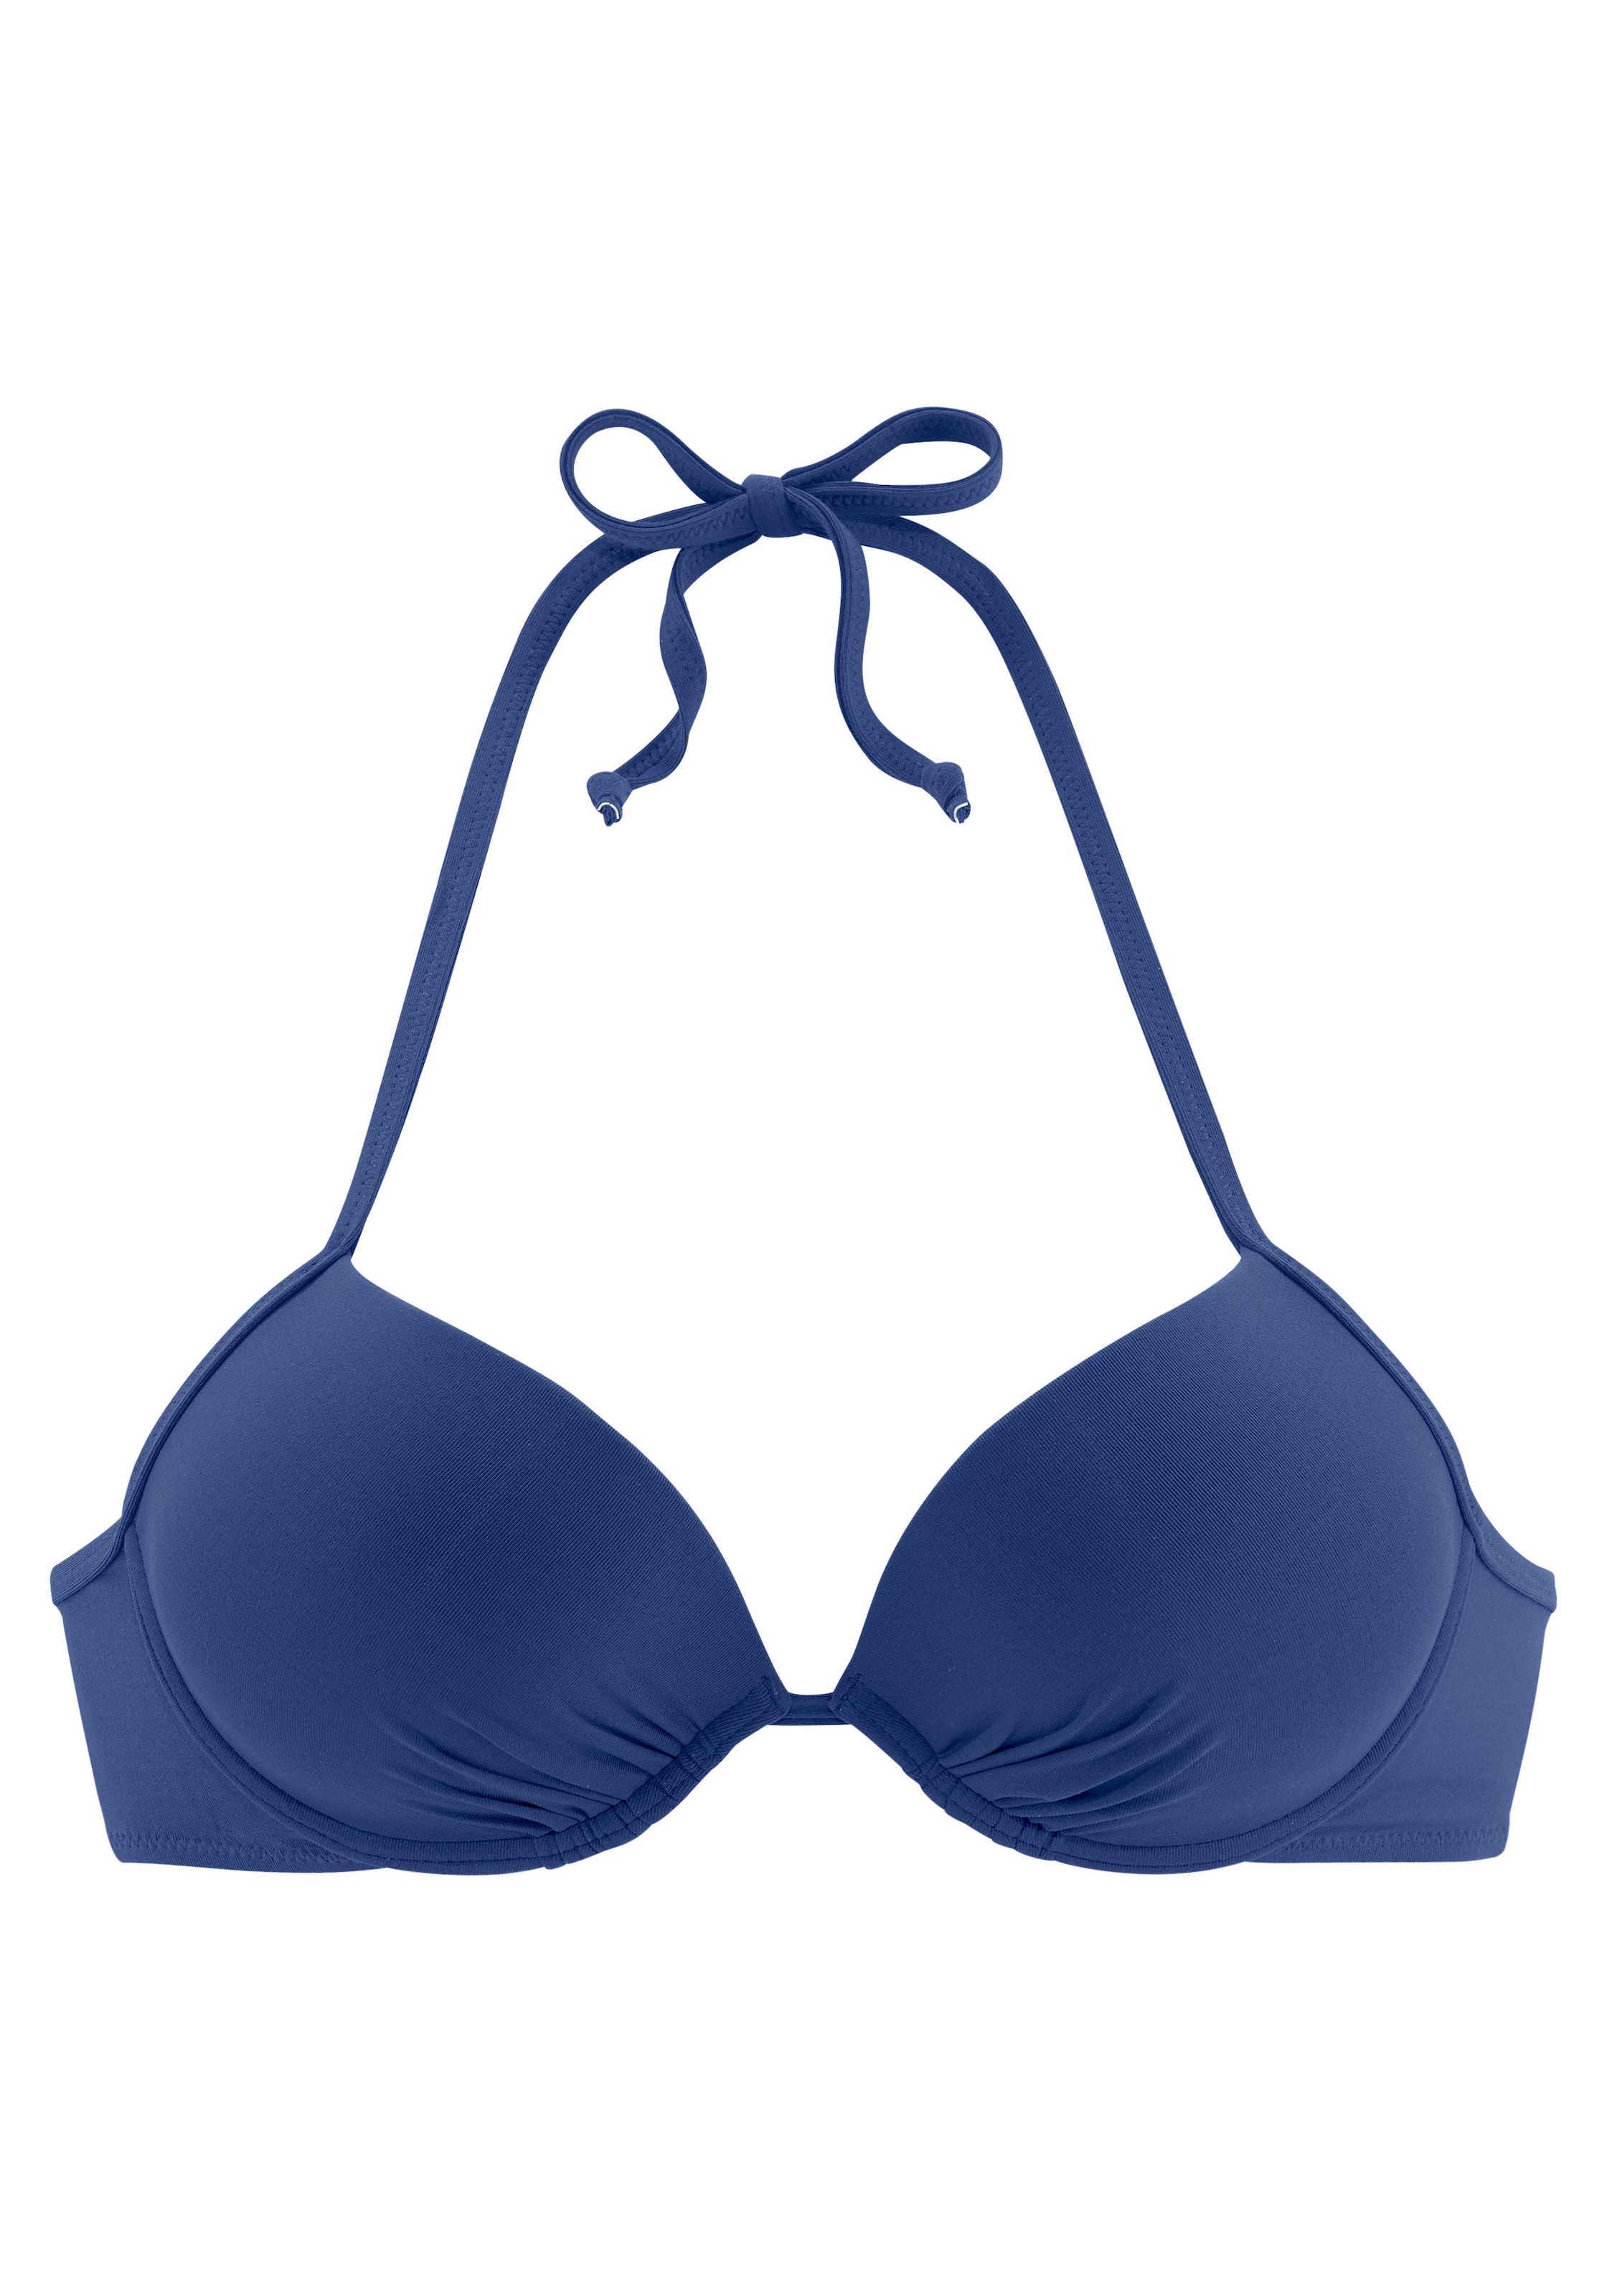 Bestelle Push Up Bikinis online im Lascana Shop